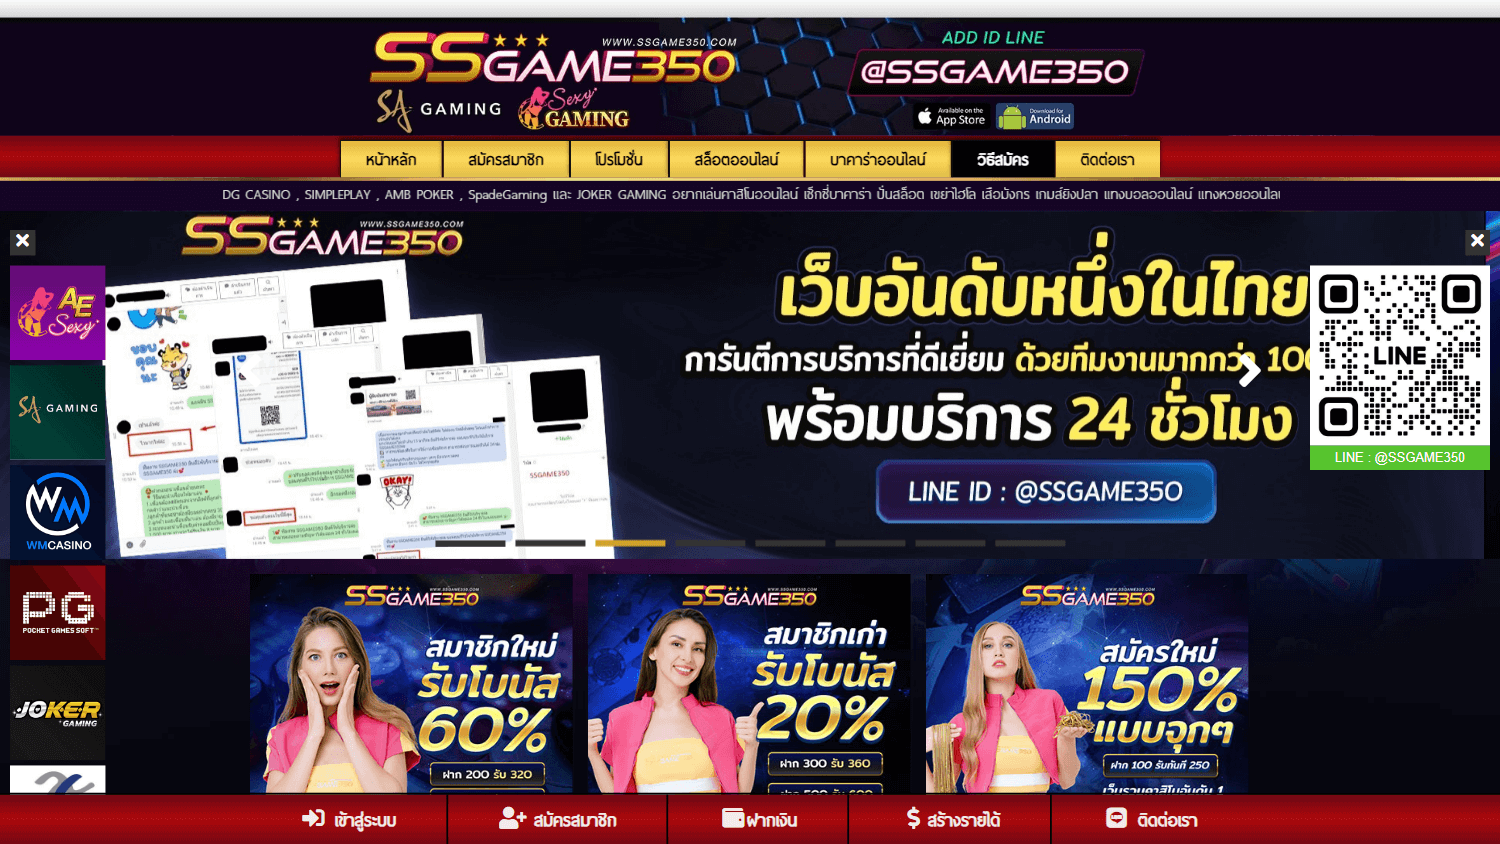 ssgame350_casino_homepage_desktop